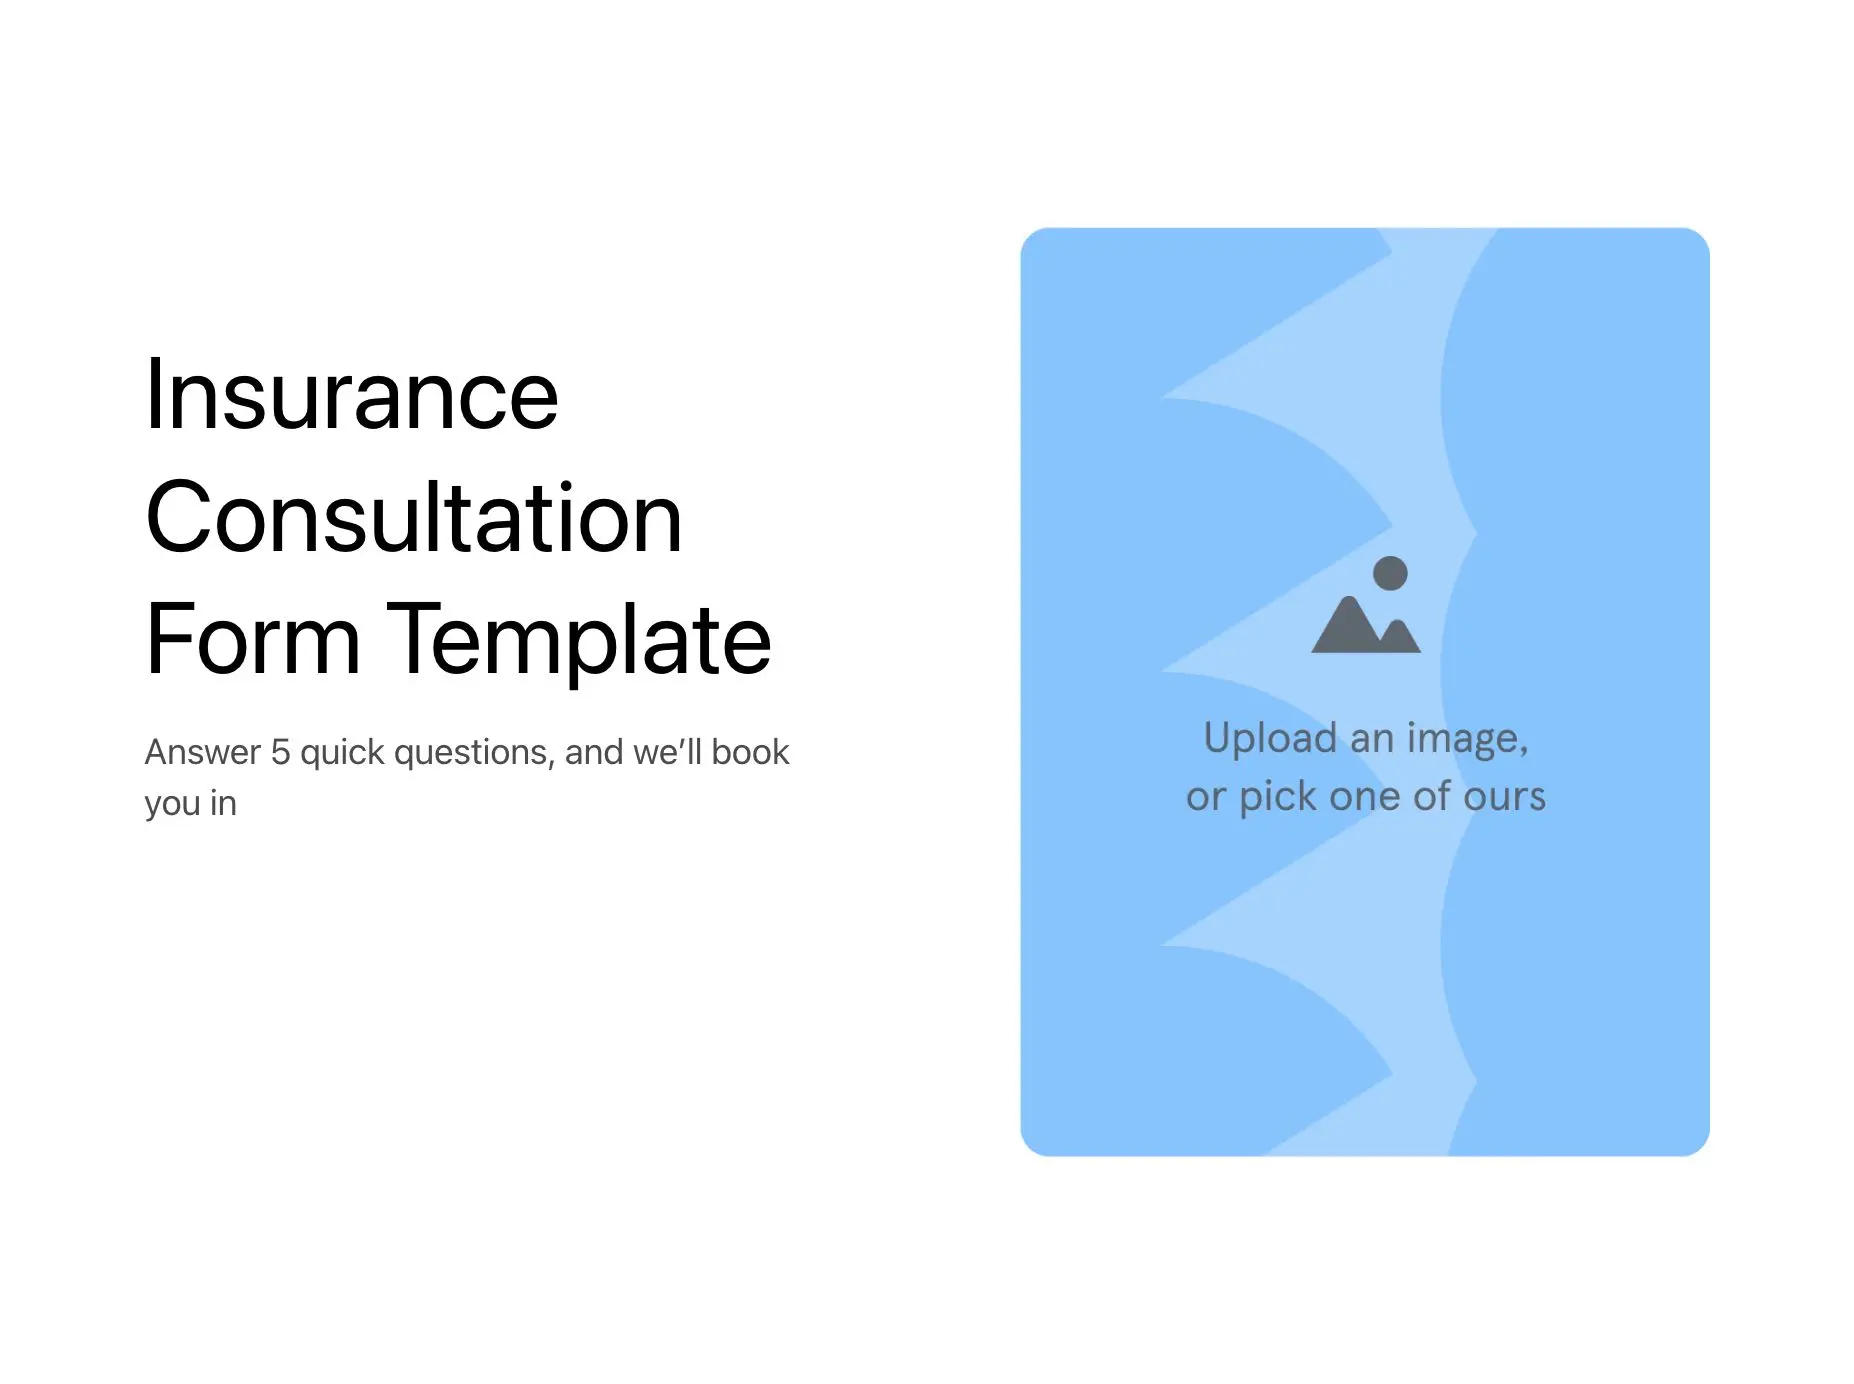 Insurance Consultation Form Template Hero